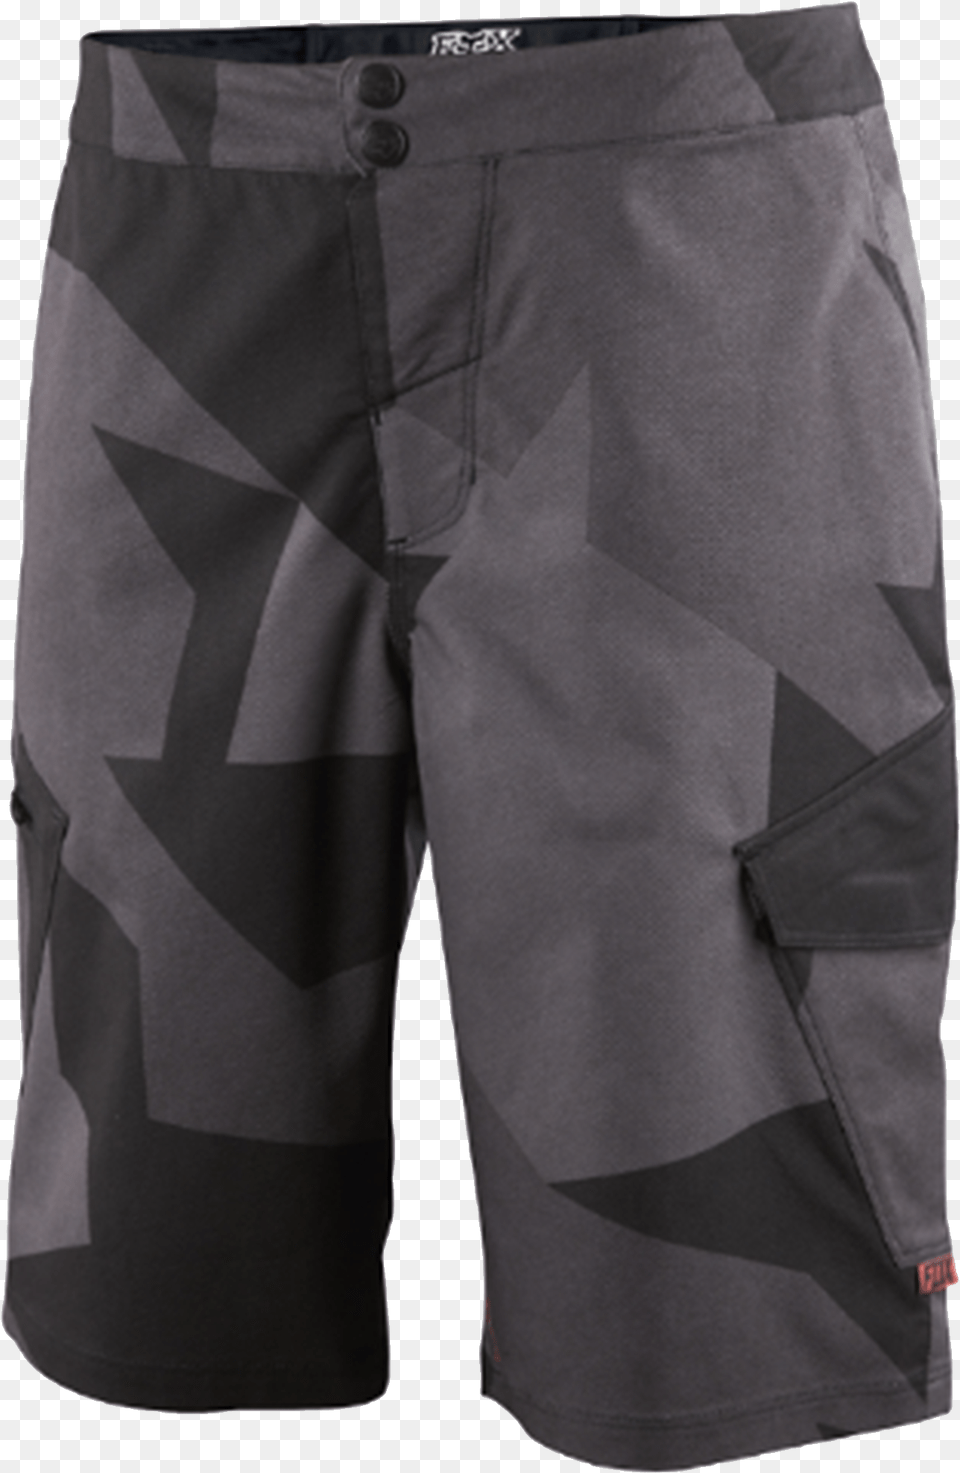 Fox Ranger Cargo Shorts Black Camodata Zoom Cdn Shorts Fox Mtb Precio Chile, Clothing, Coat, Pants Free Transparent Png